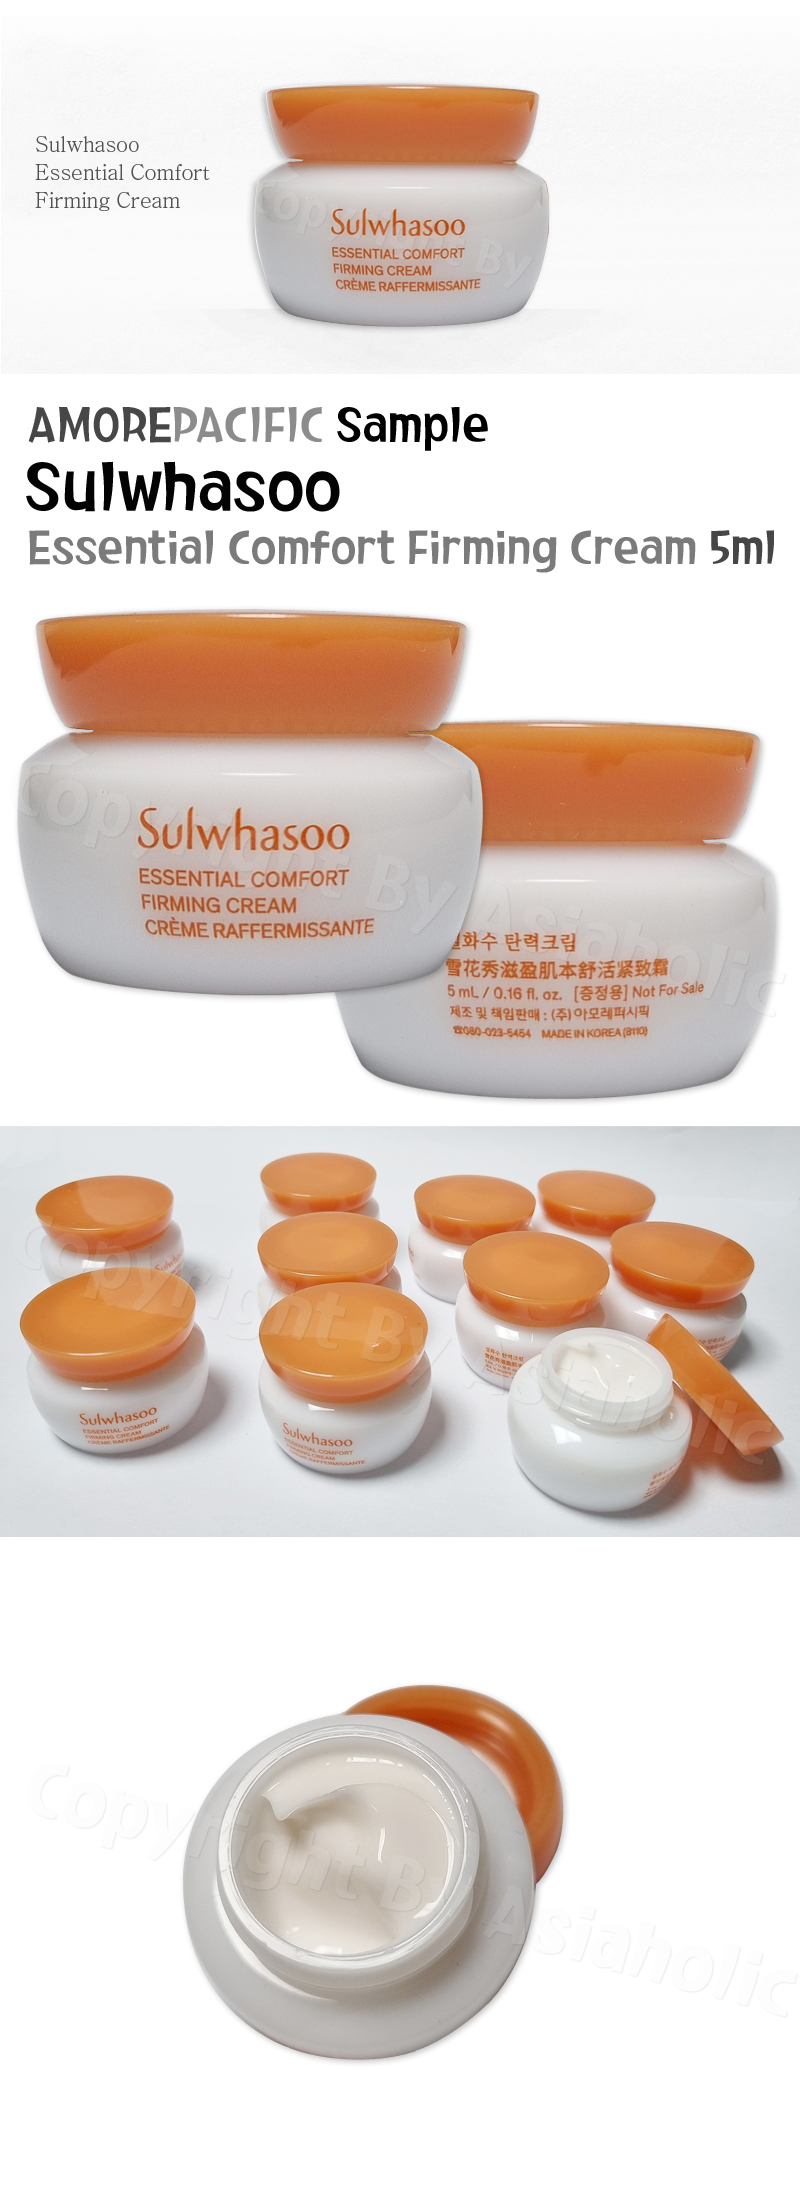 Sulwhasoo Essential Comfort Firming Cream 5ml x 20pcs (100ml) Sample Newest Version